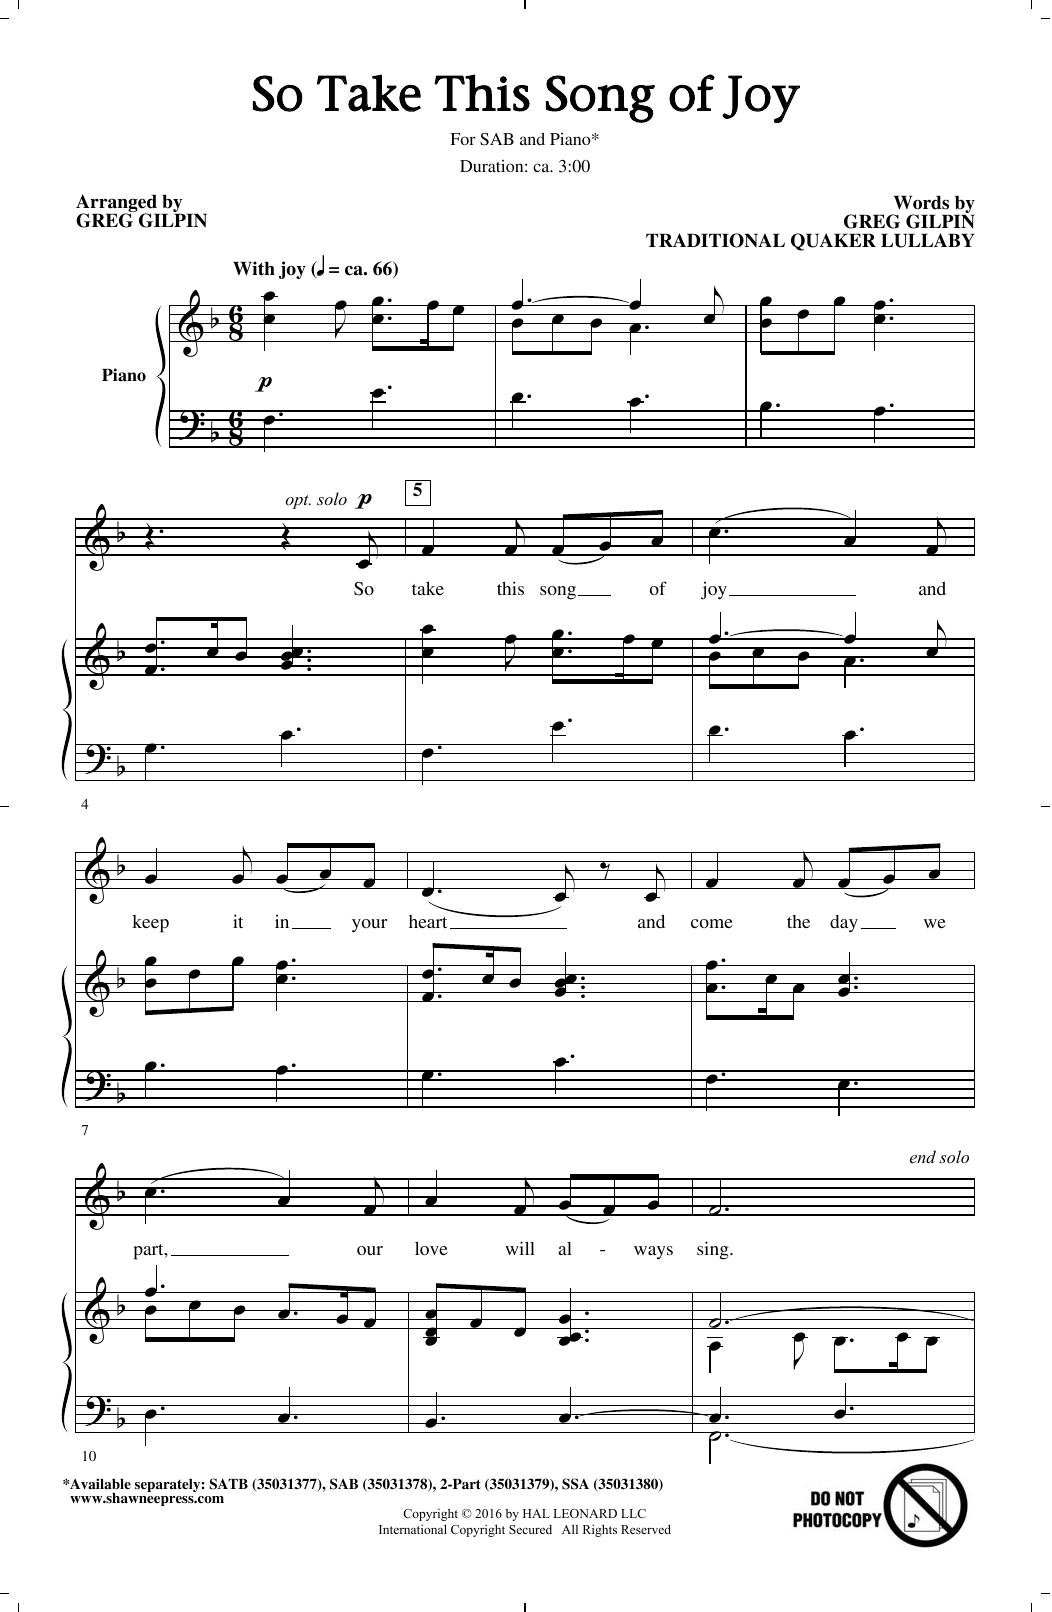 Greg Gilpin So Take This Song Of Joy Sheet Music Notes & Chords for SATB - Download or Print PDF